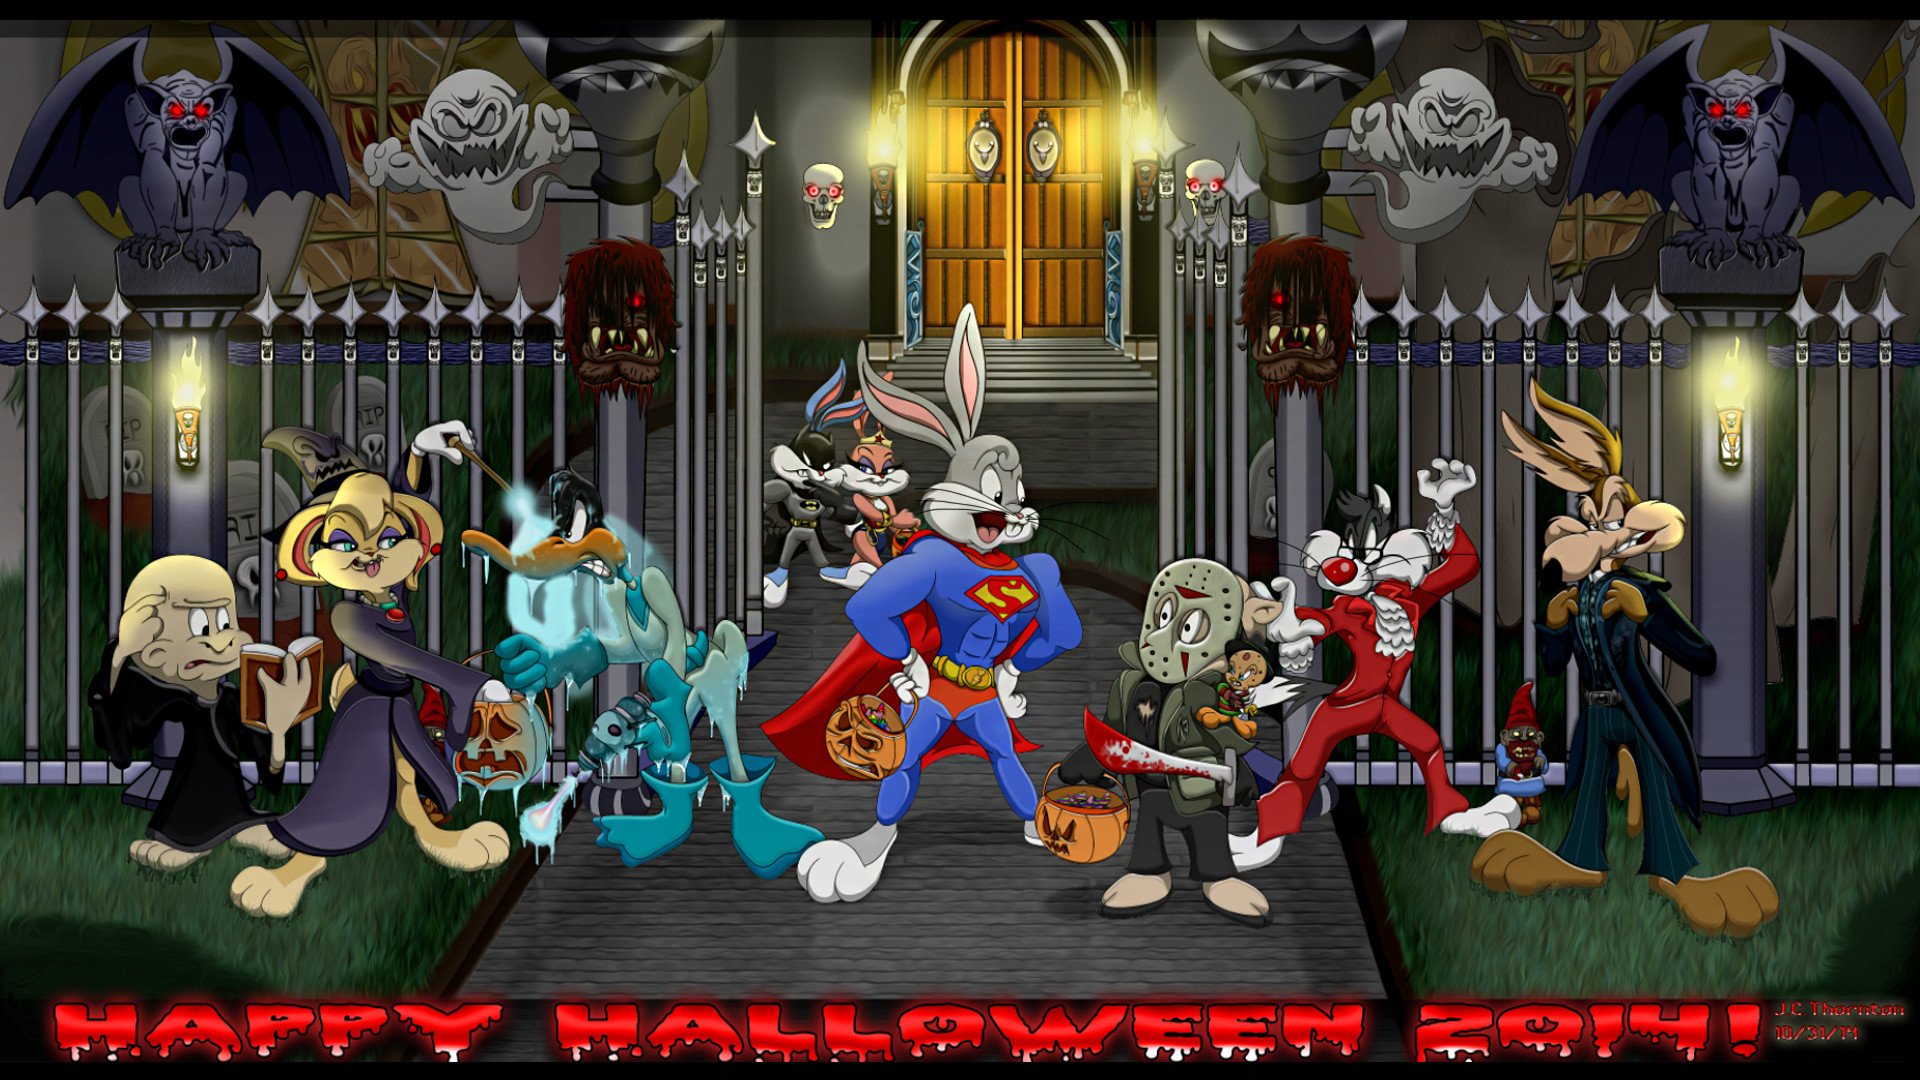 1920x1080 Looney Tunes Halloween Wallpaper WallpaperSafari. Happy Halloween! by  JCThornton on DeviantArt